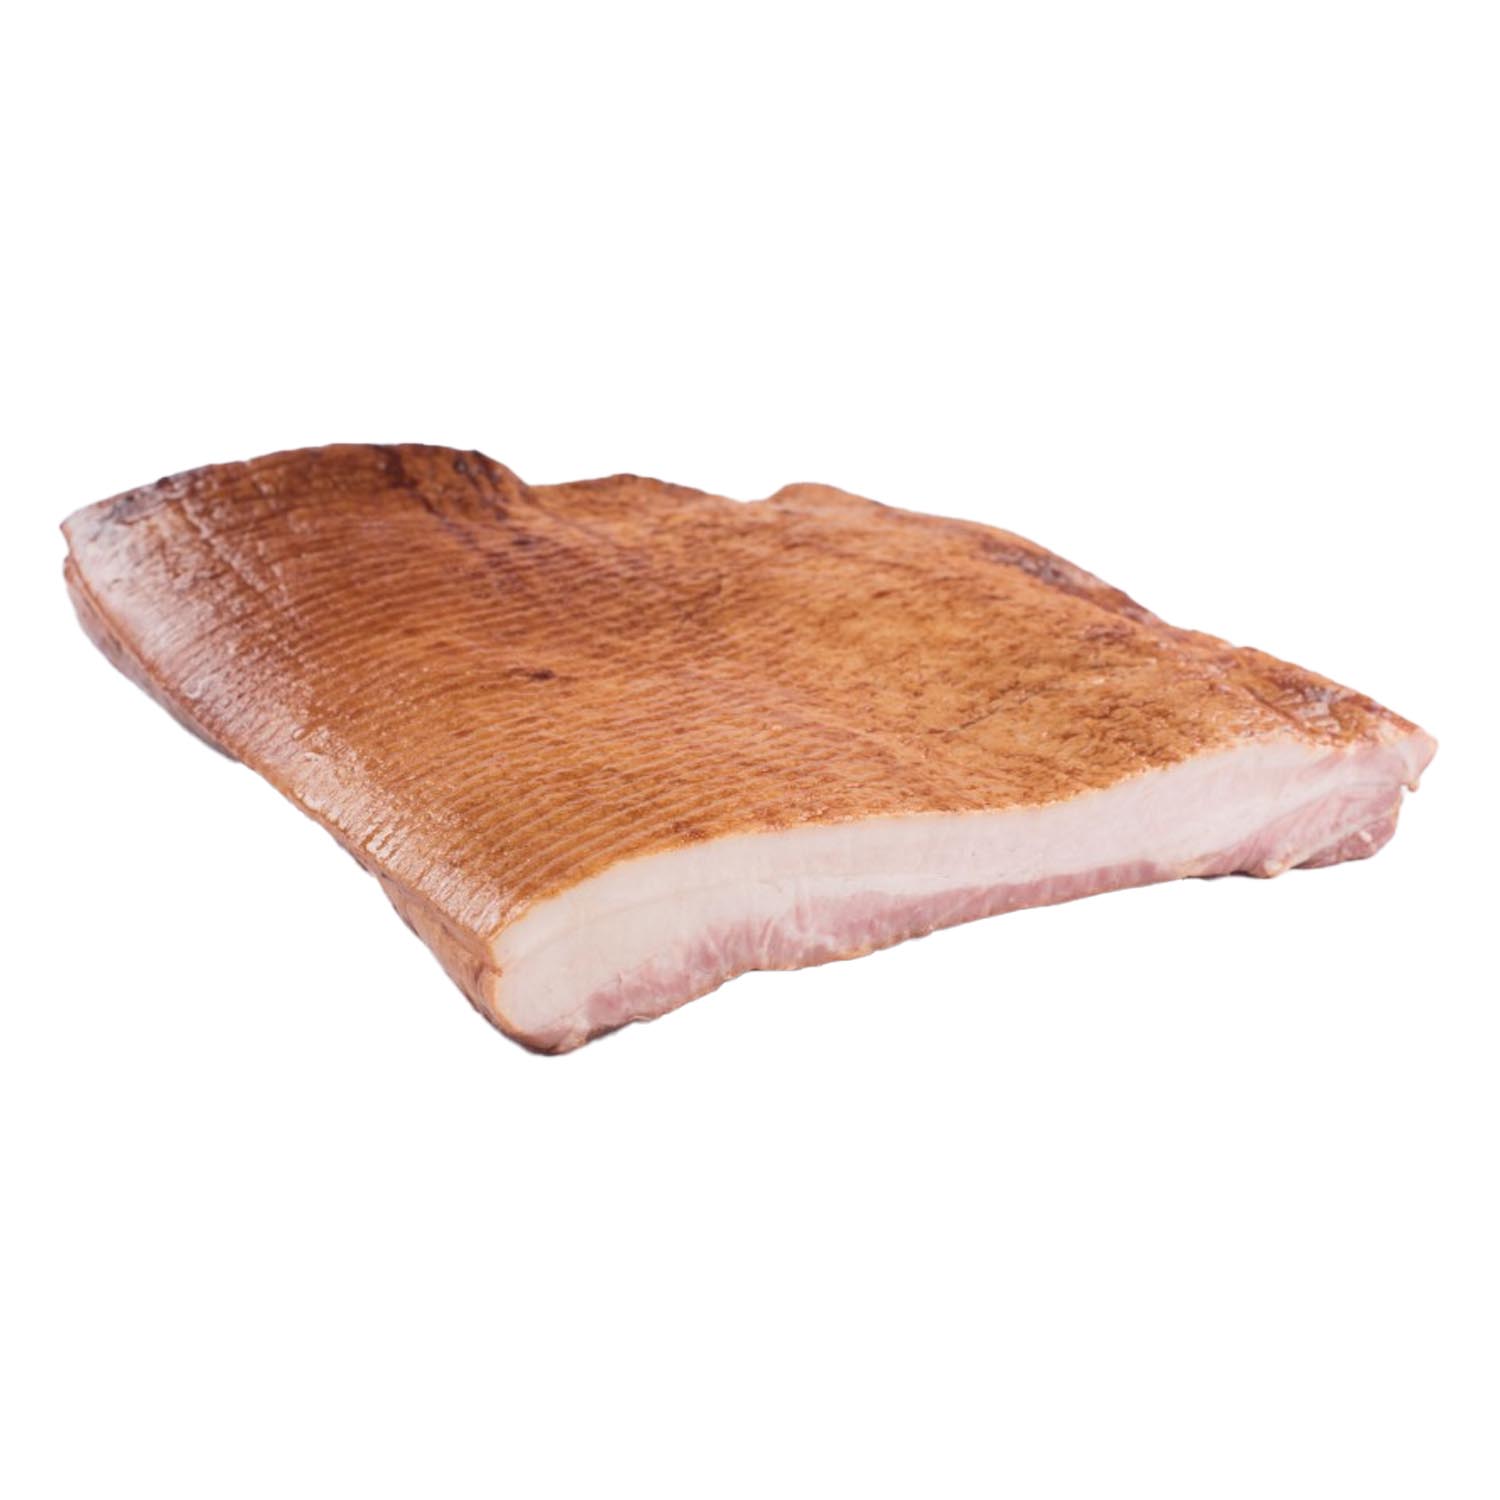 Bacon demi flèche ancienne frais ±2,5 kg ROCH | 'Mayrand Plus